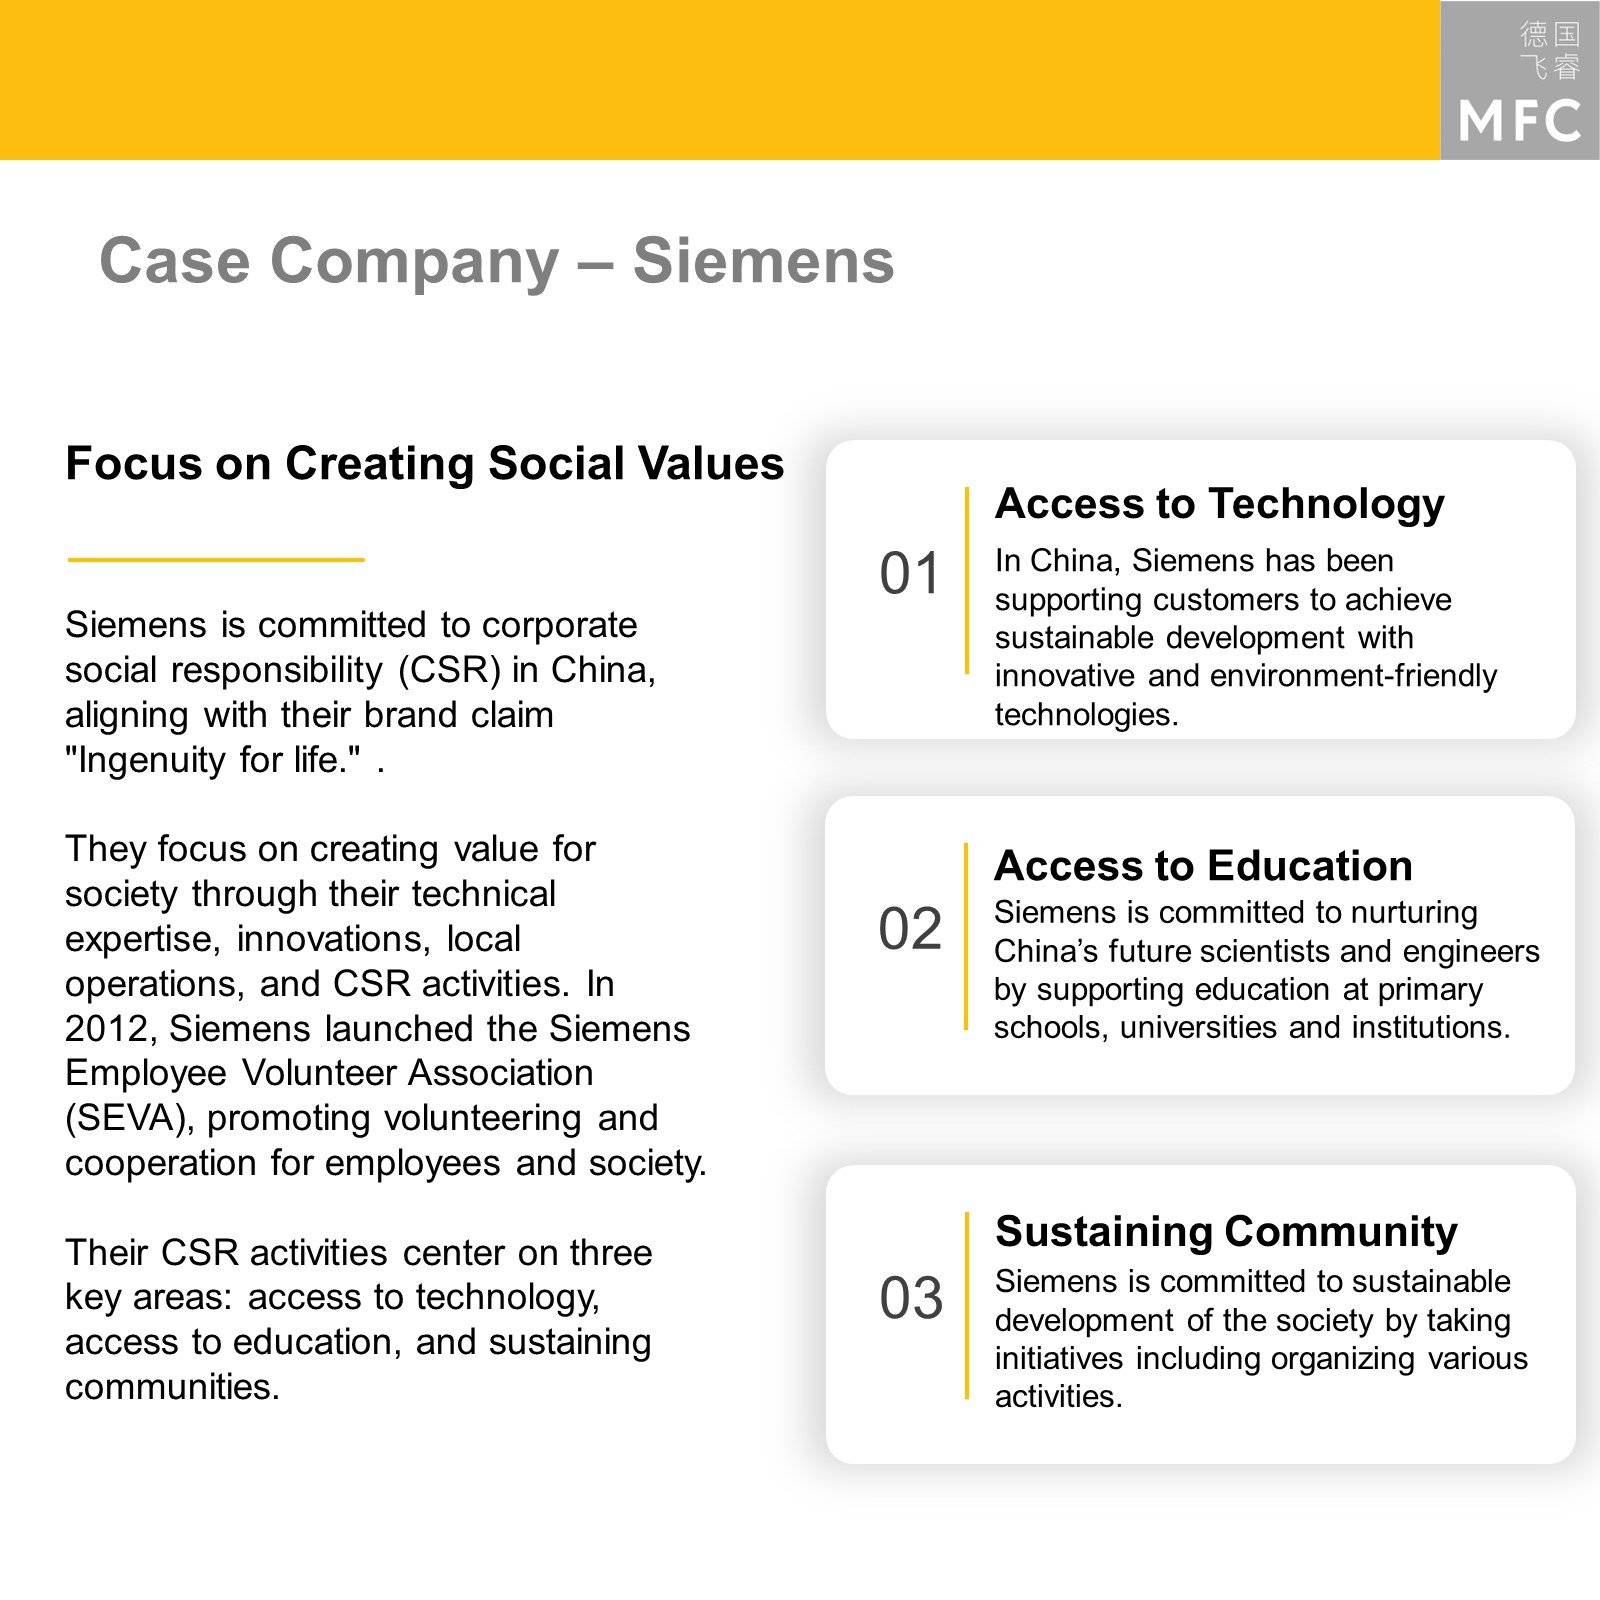 Siemens Case Company: